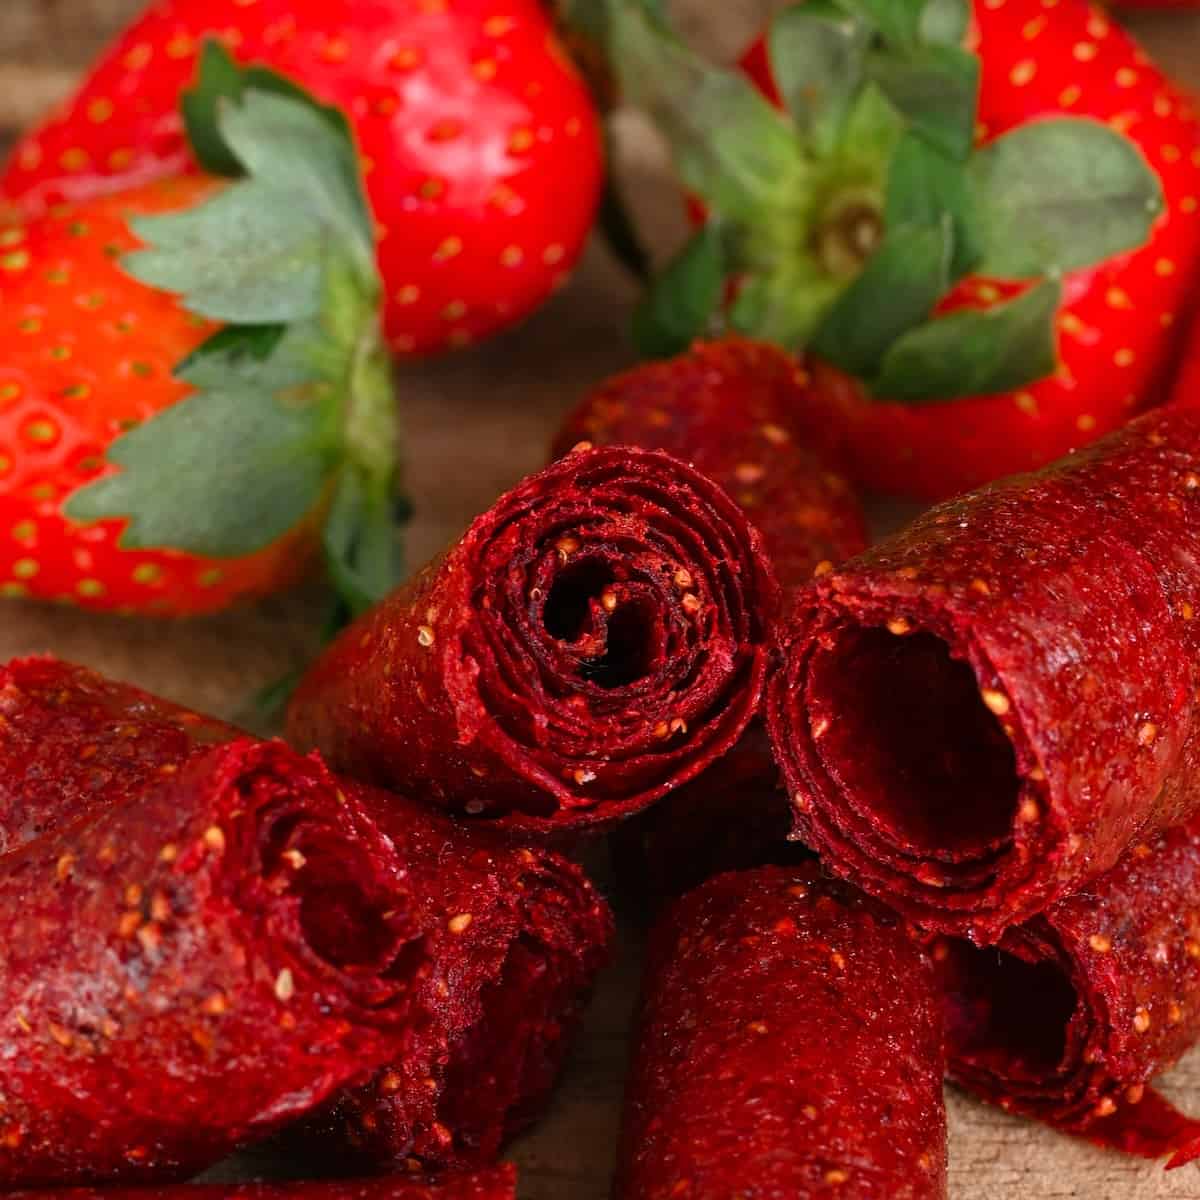 Homemade Strawberry Fruit Leather Roll-Ups (Dehydrator Recipe